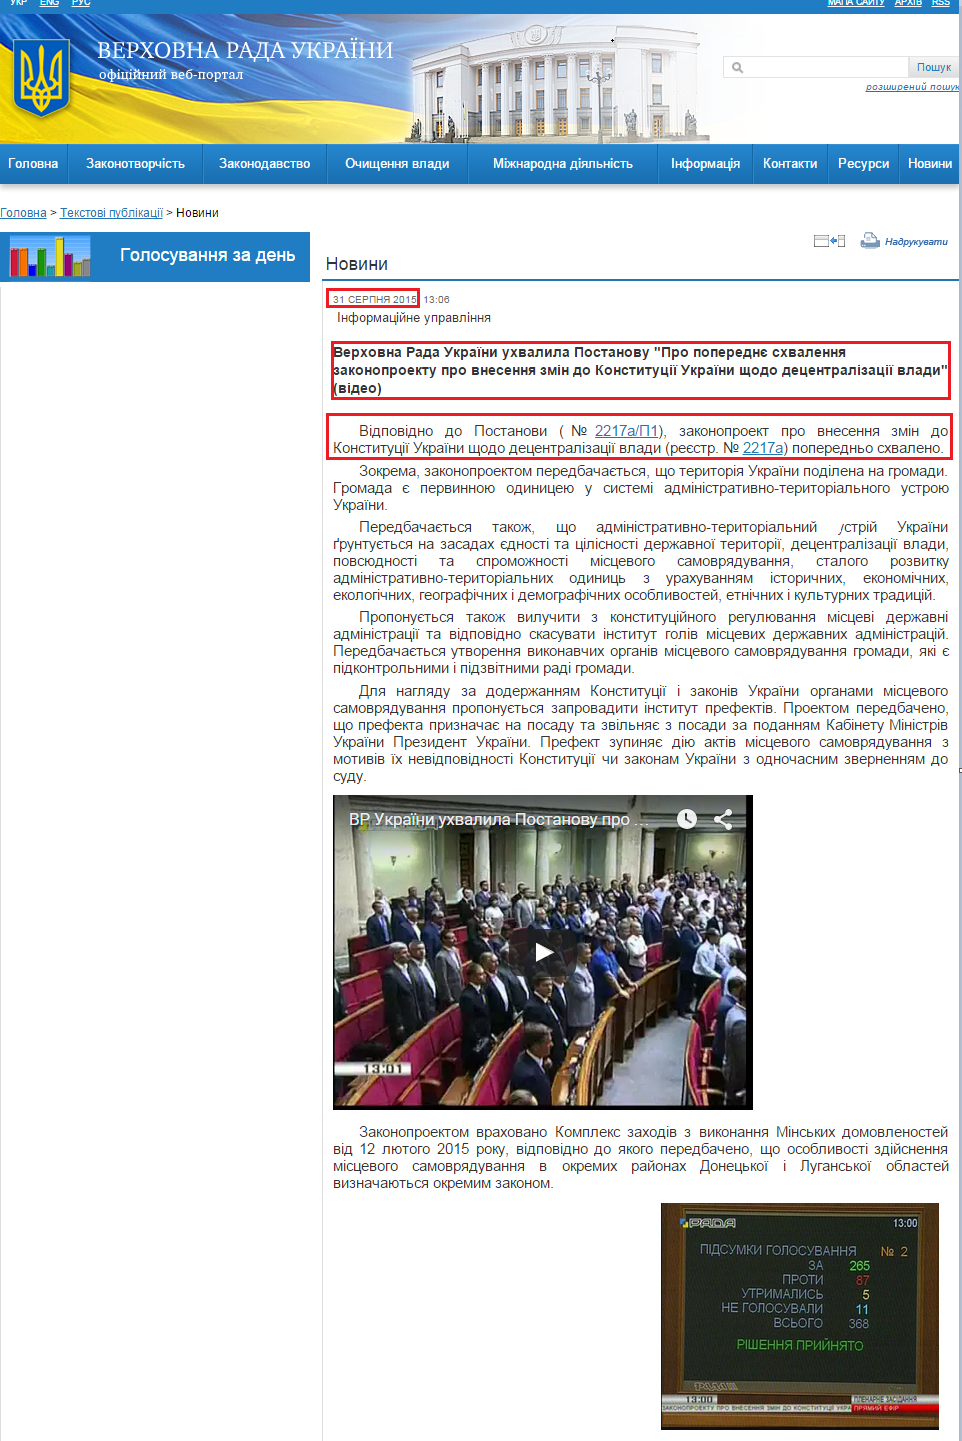 http://www.rada.gov.ua/news/Novyny/114760.html